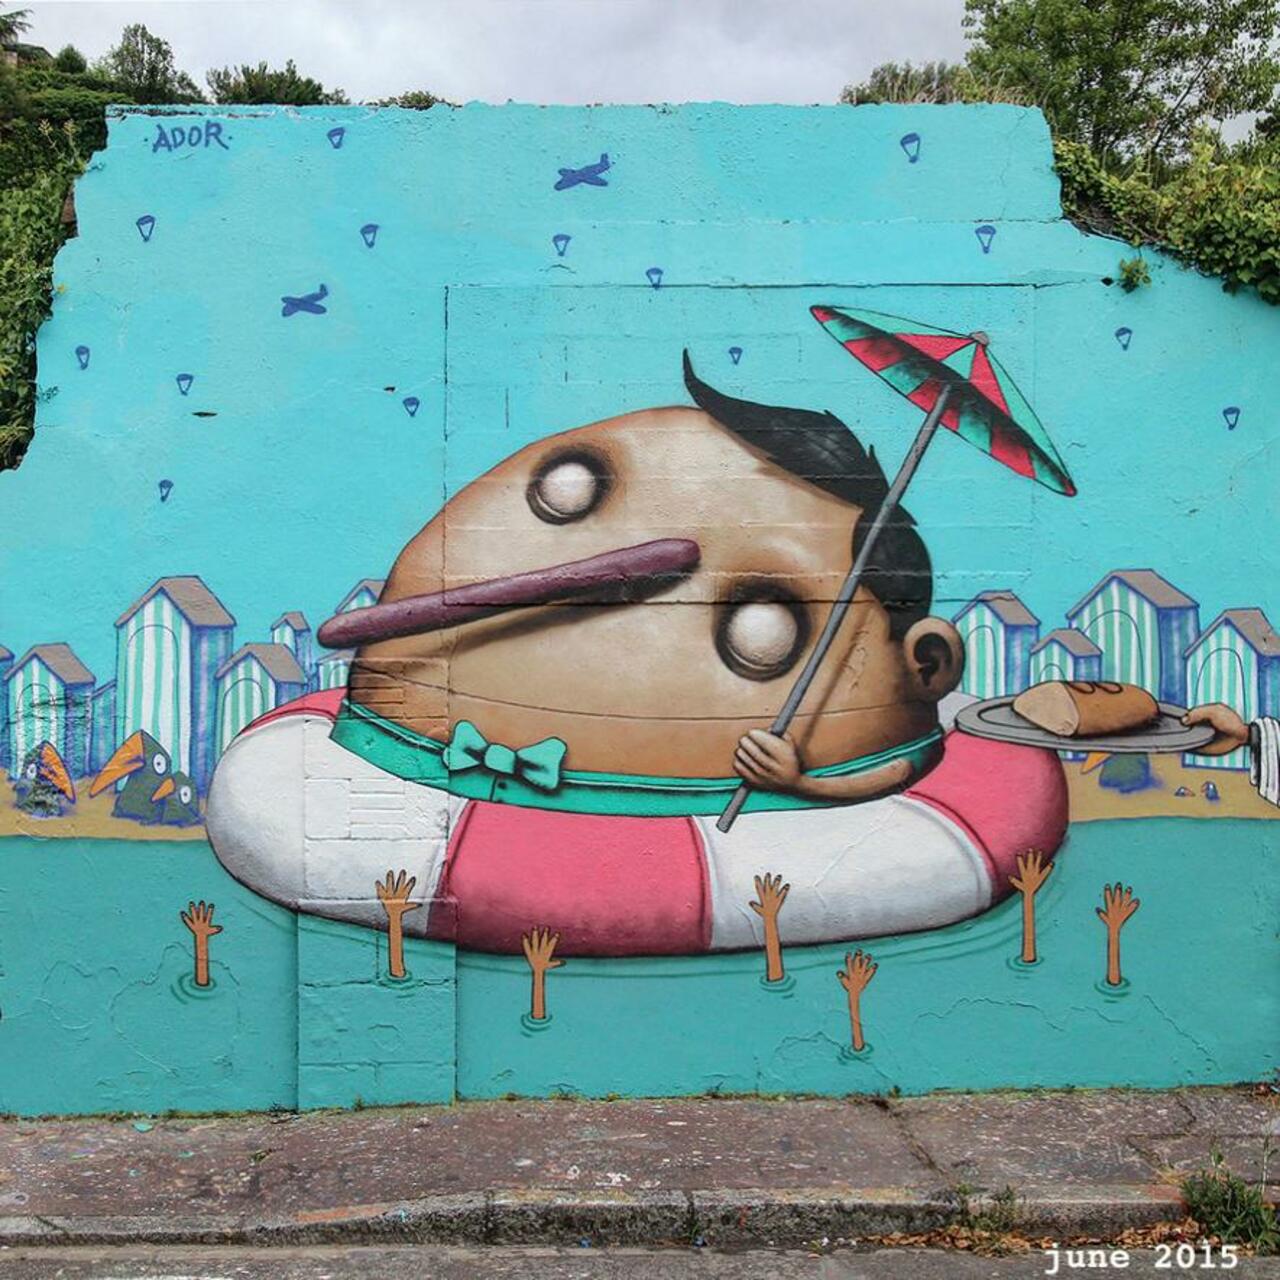 "Summer" by Ador in France (http://globalstreetart.com/ador)
Via @globalstreetart 
#streetart #urbanart #mural #art #graffiti http://t.co/KPp5PENNZD